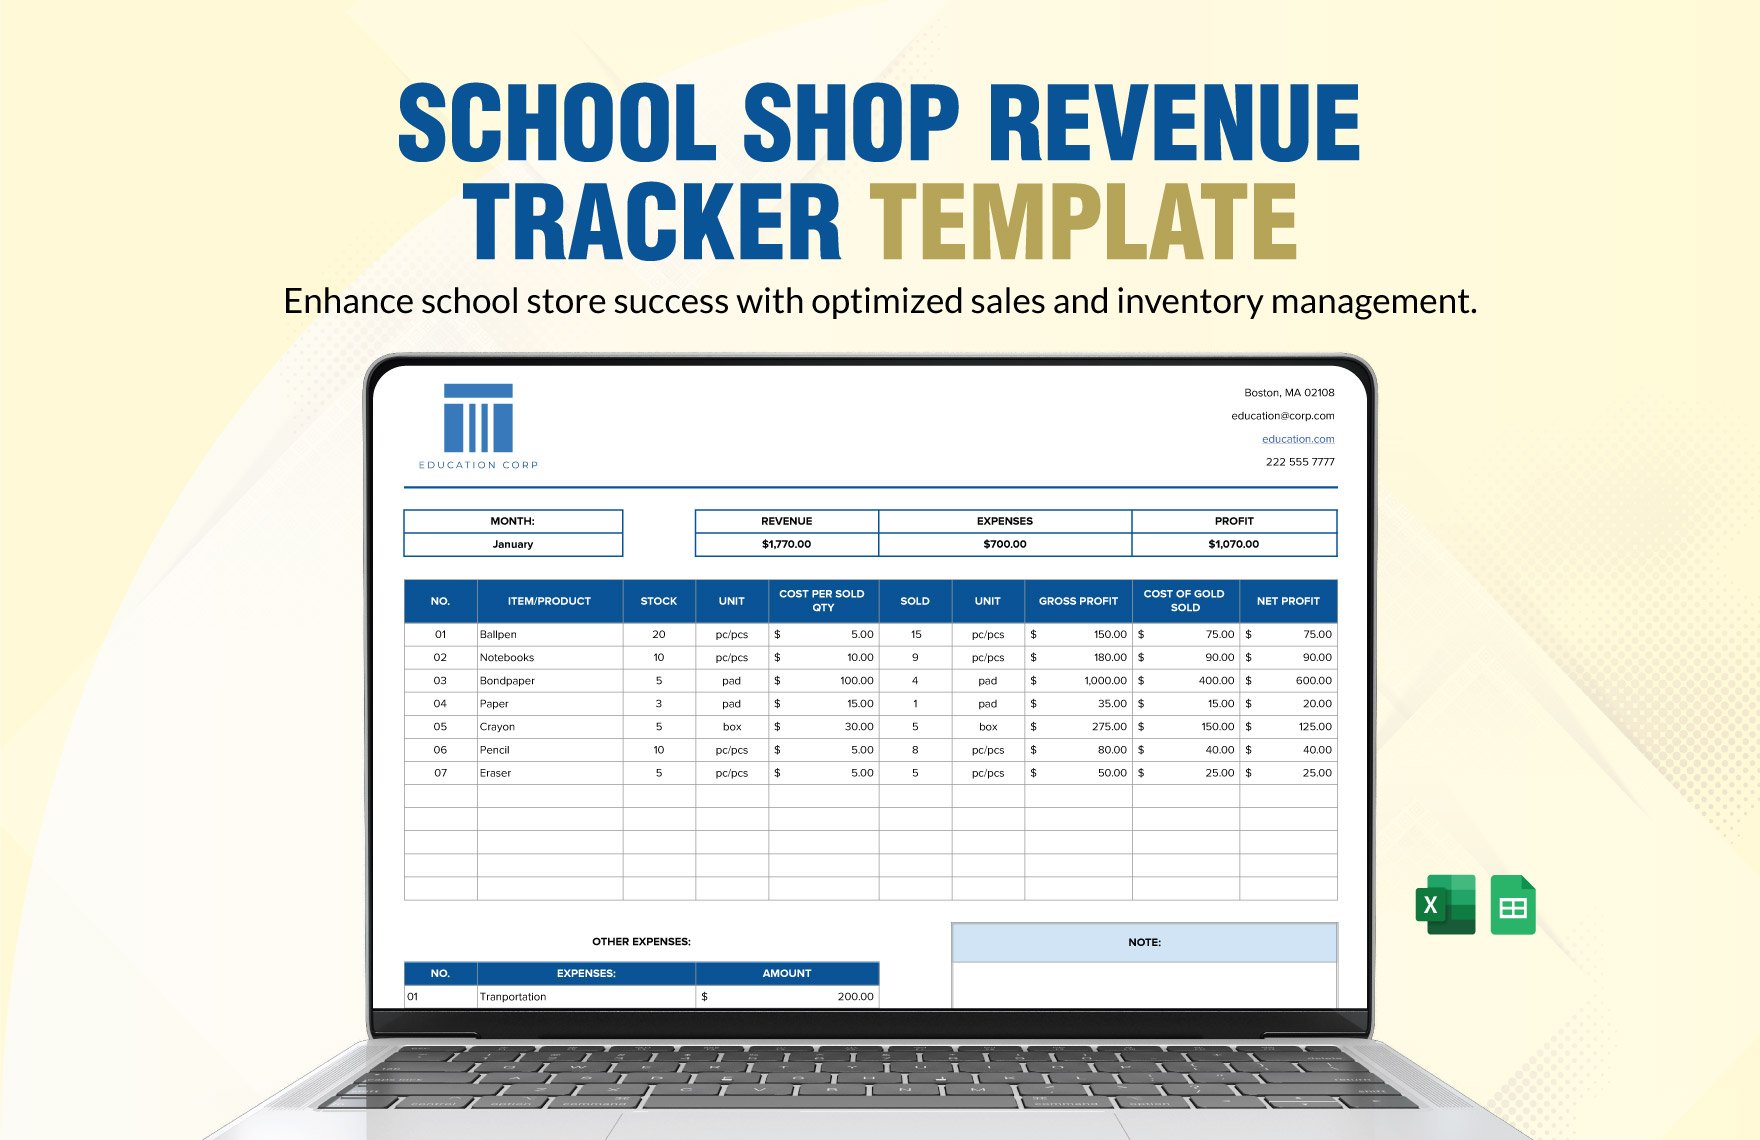 School Shop Revenue Tracker Template in Excel, Google Sheets